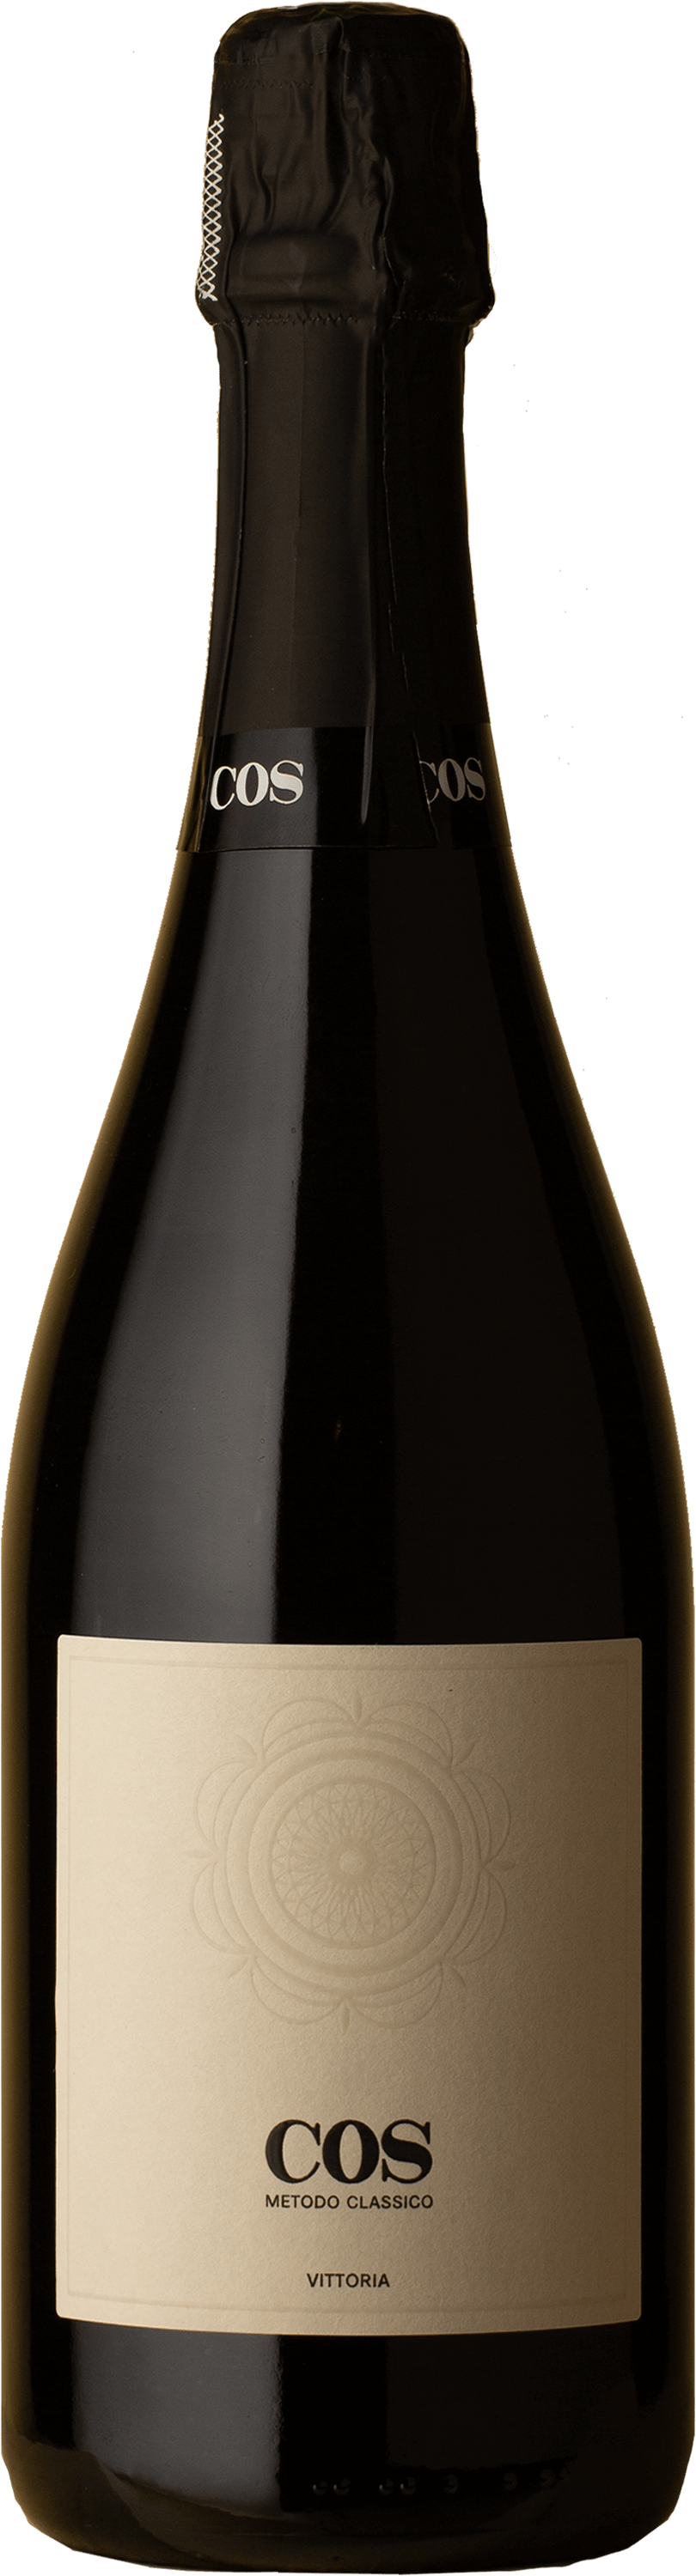 COS - Spumante Frappato 2018 Sparkling Wine